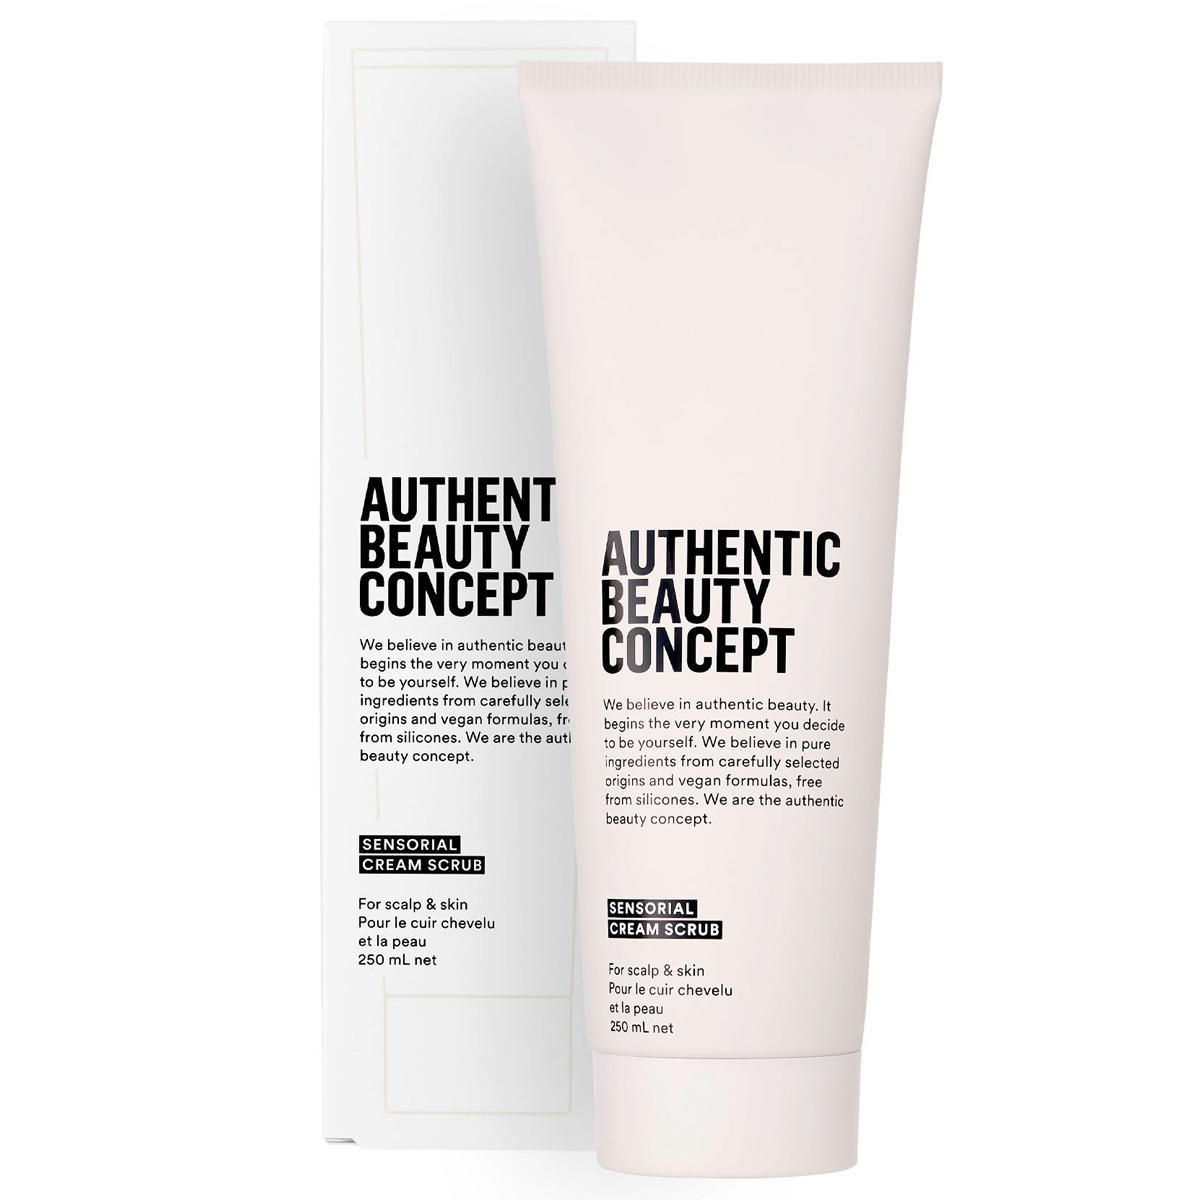 Authentic Beauty Concept Sensorial Cream Scrub 250 ml - 2